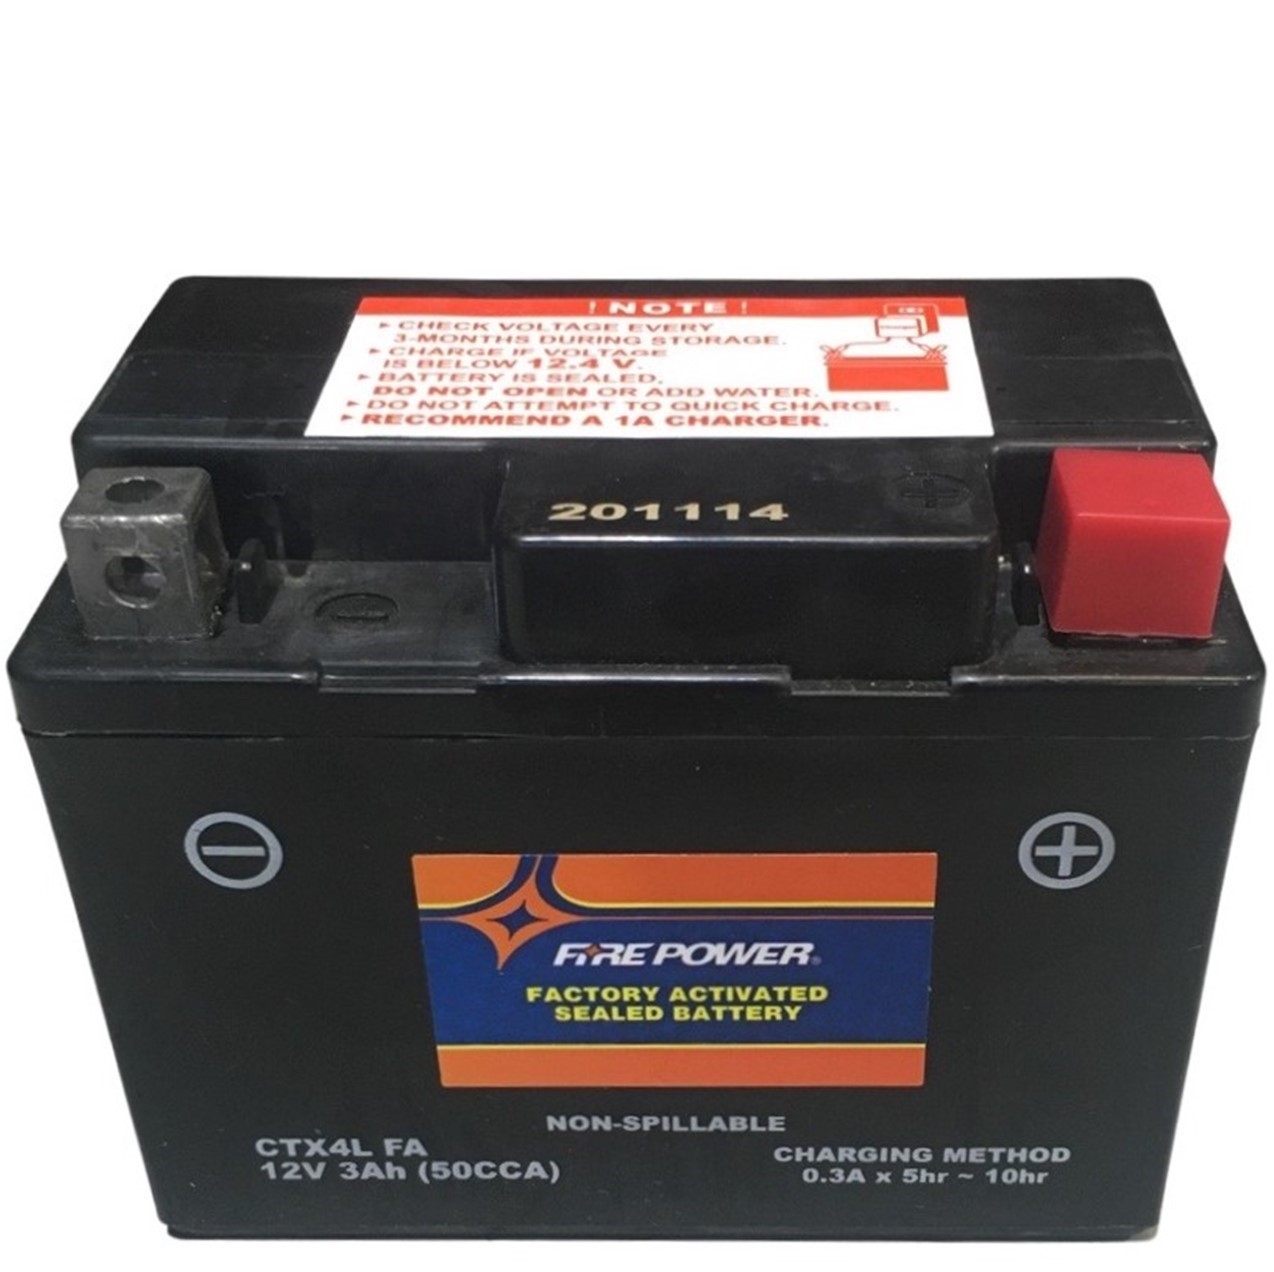 CTX4L FA Fire Power Battery Sealed Maintenance Free L=4 3/8" W=2.75" H=3 3/8"